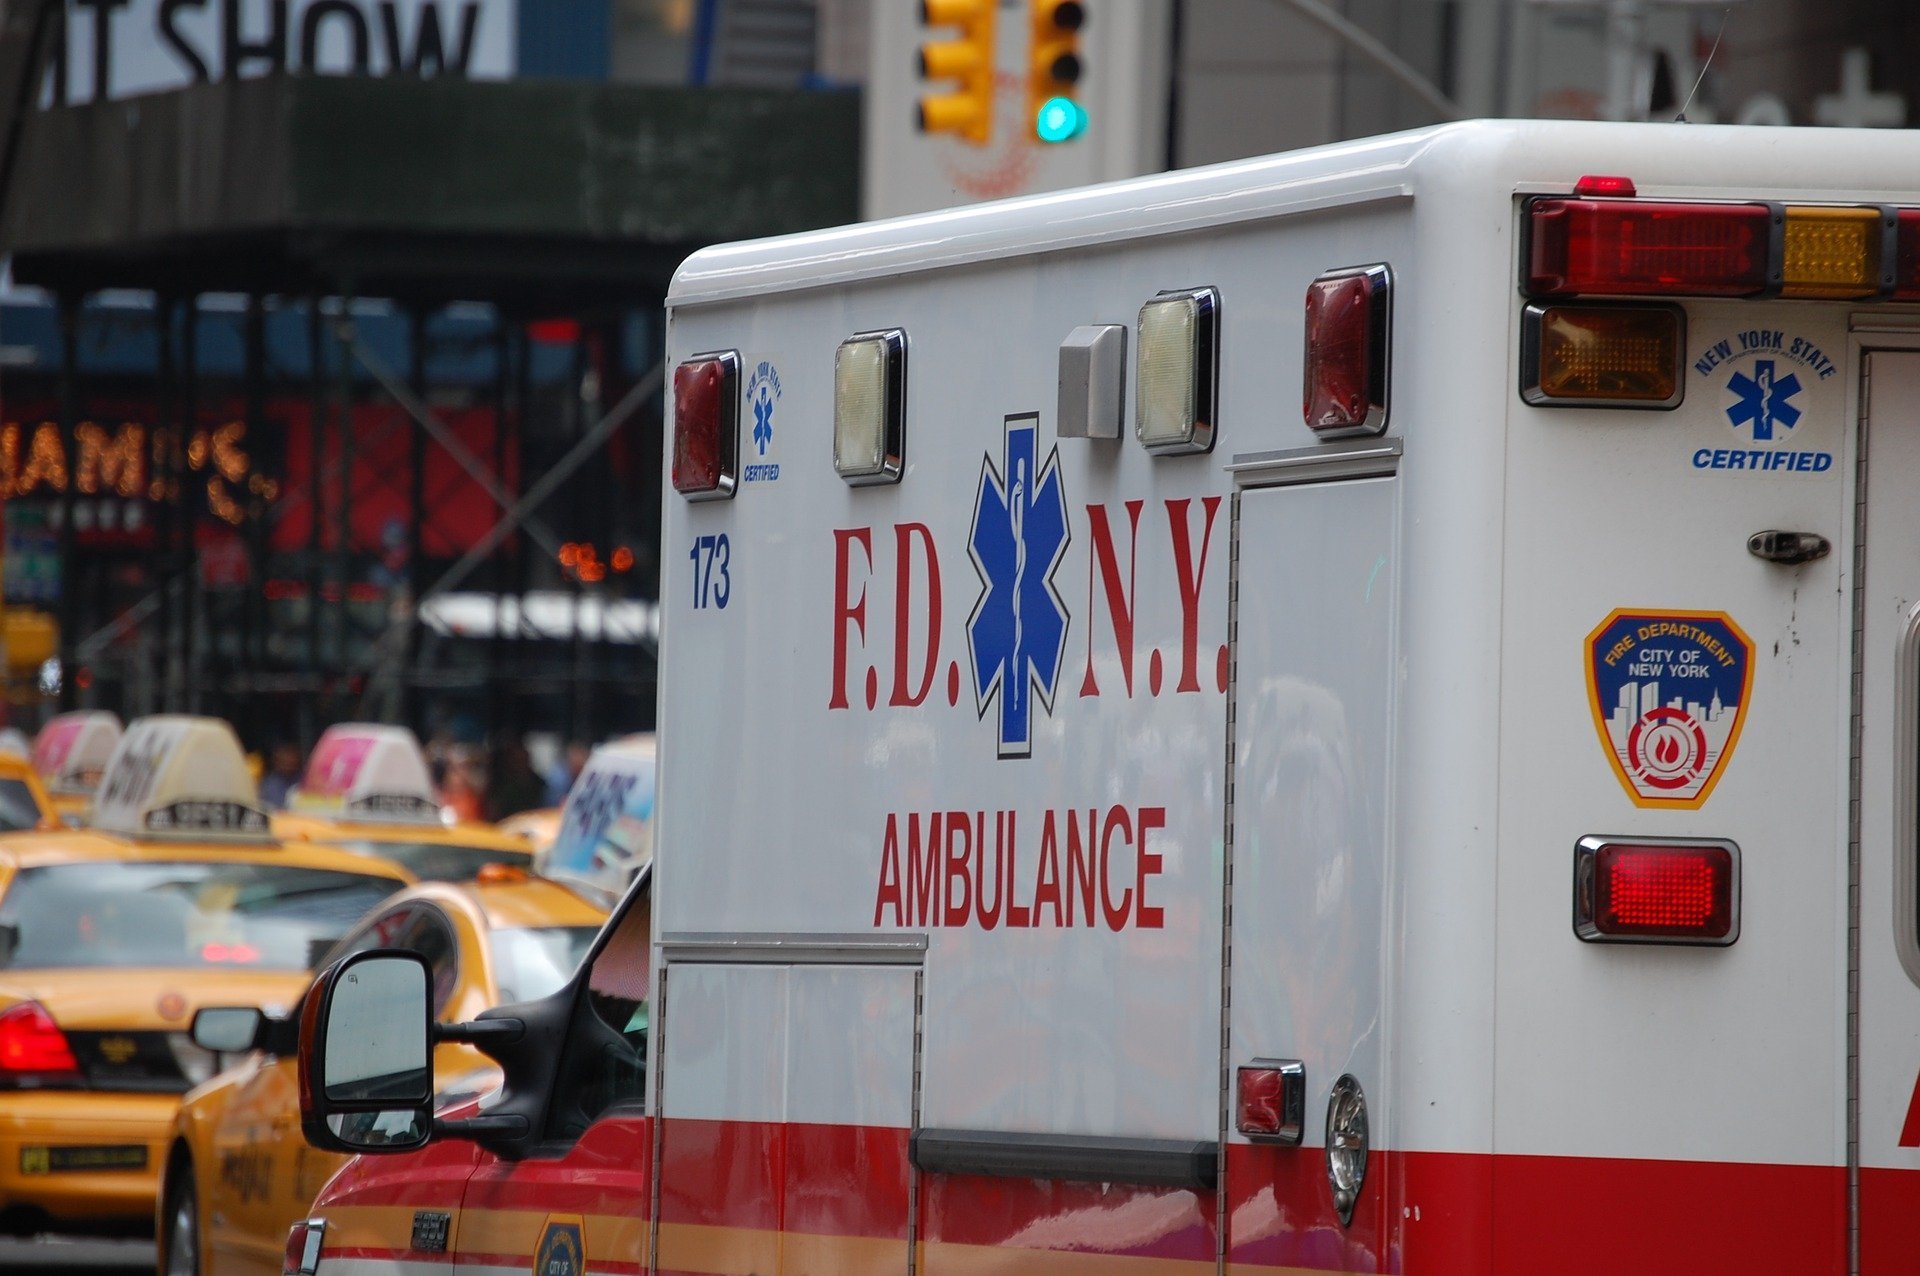 Ambulance dans la circulation. | Source : Pixabay